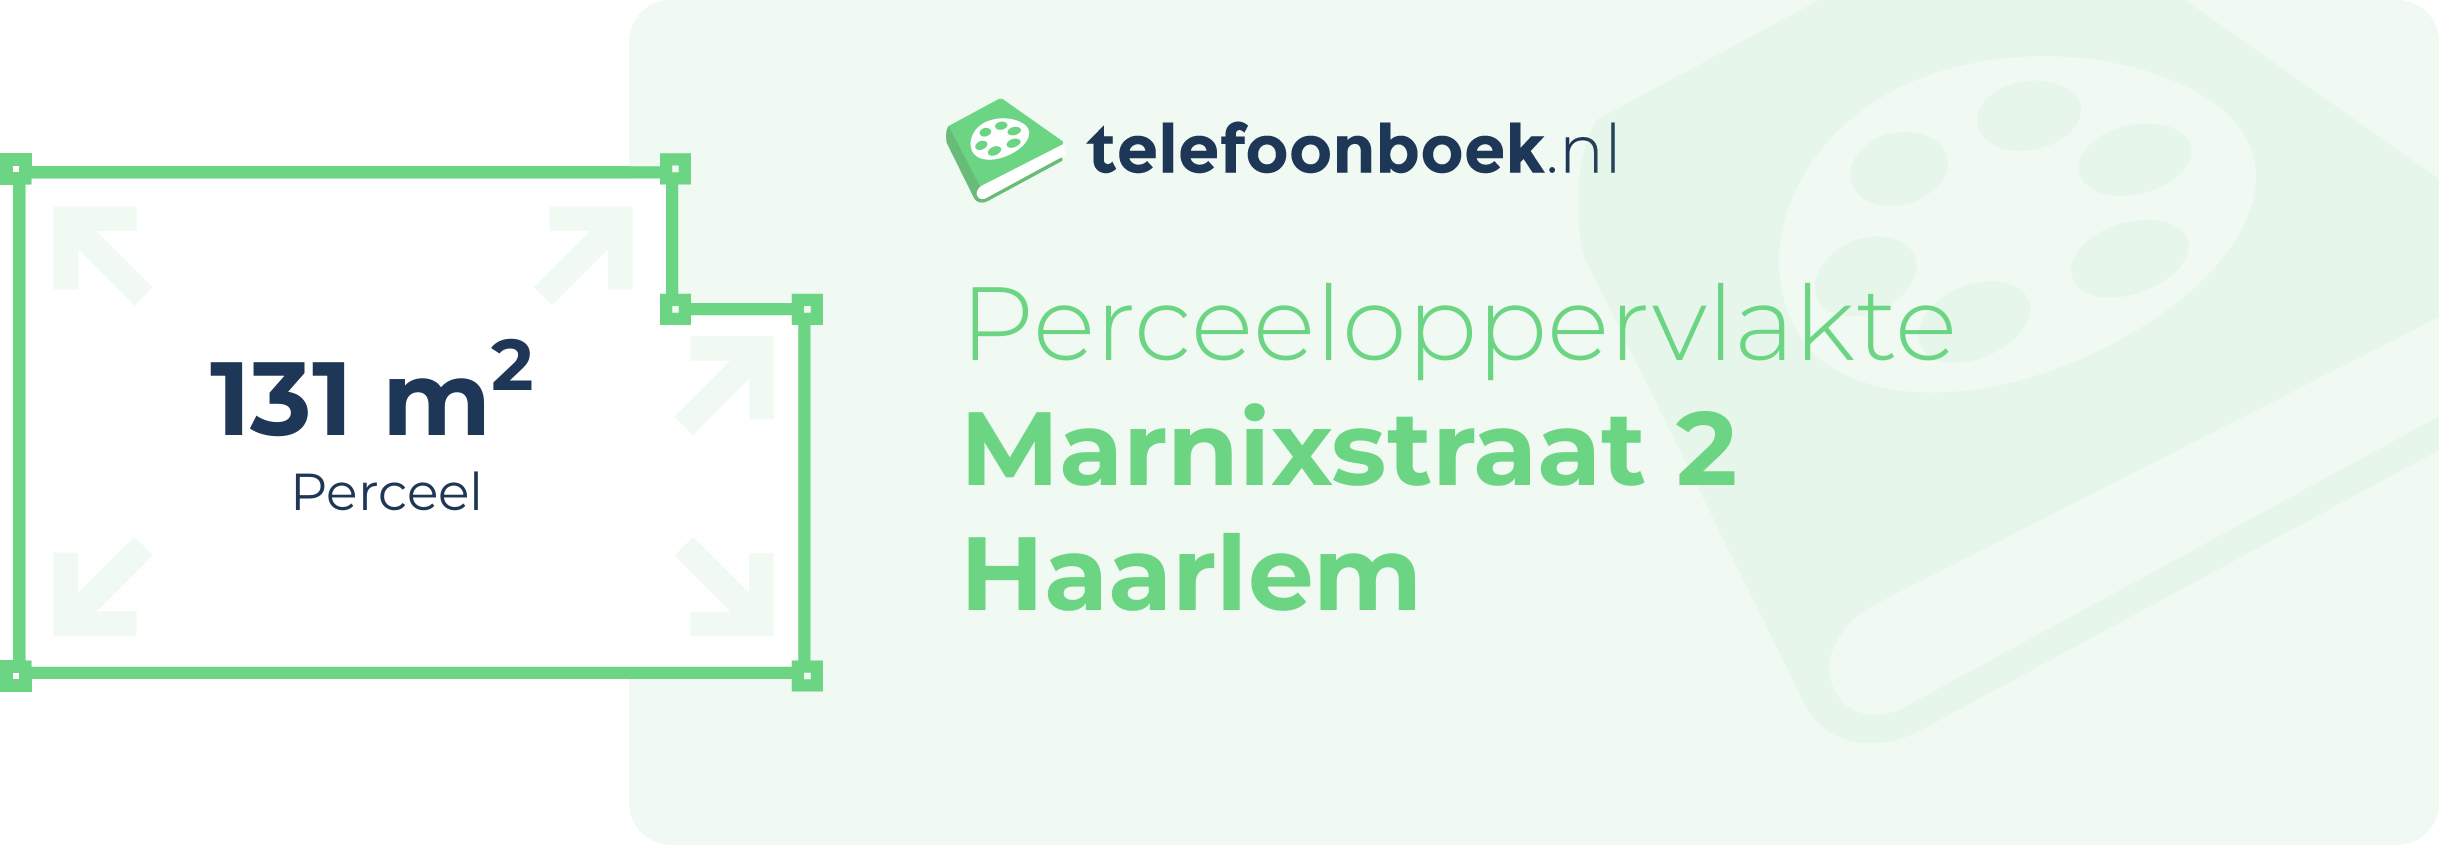 Perceeloppervlakte Marnixstraat 2 Haarlem